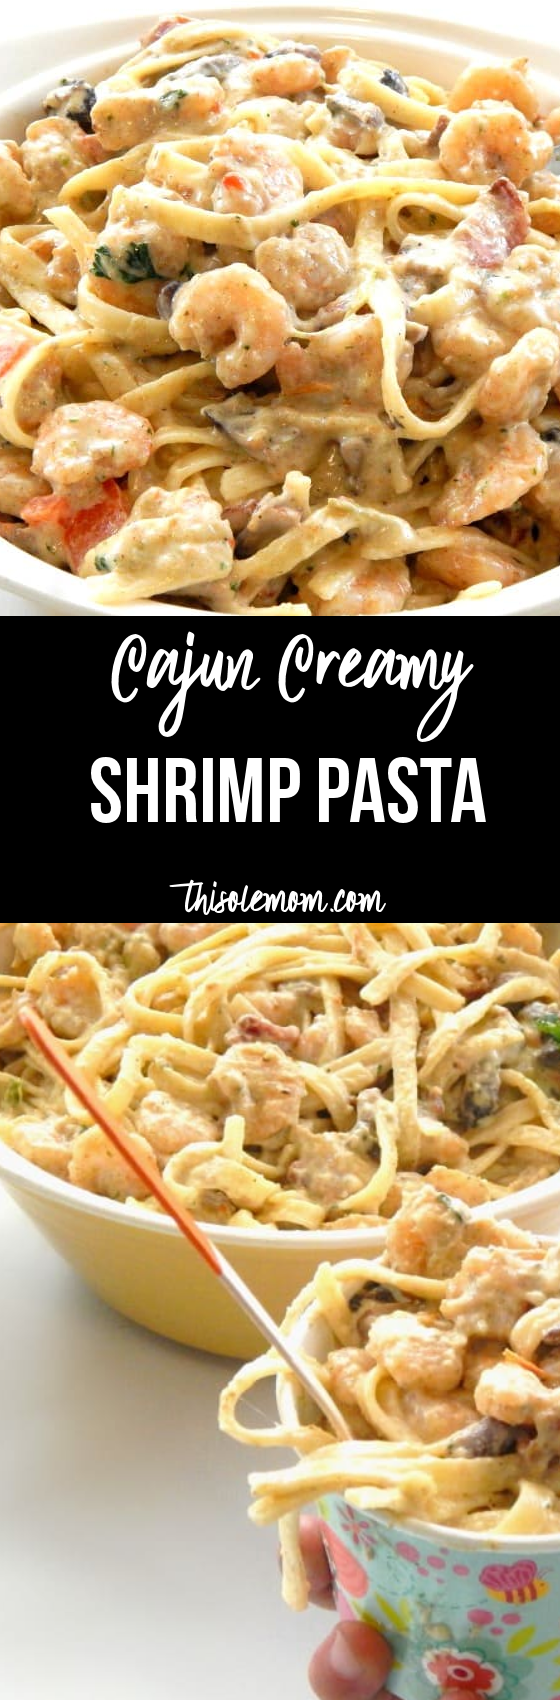 Cajun Creamy Shrimp Pasta